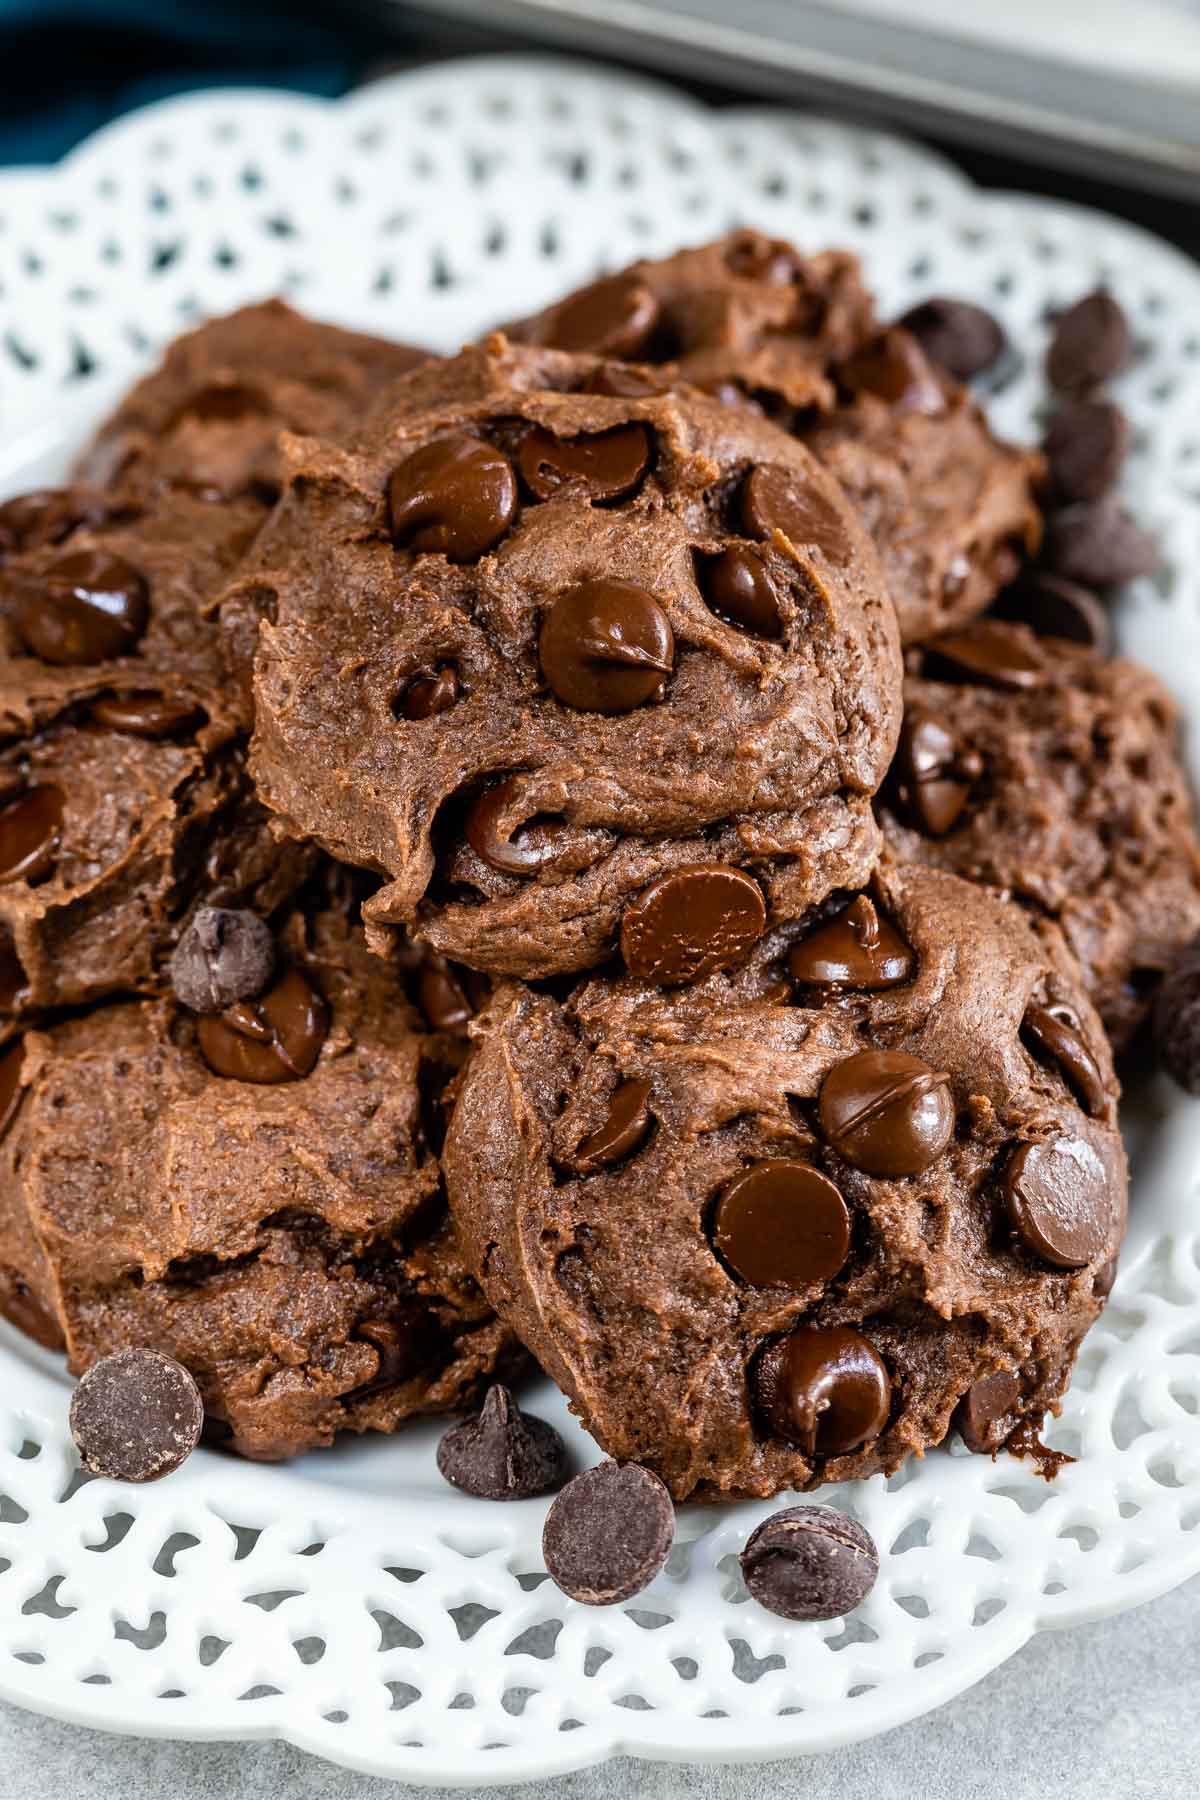 Easy Chocolate Cake Mix Cookies Recipe - How to Make Chocolate